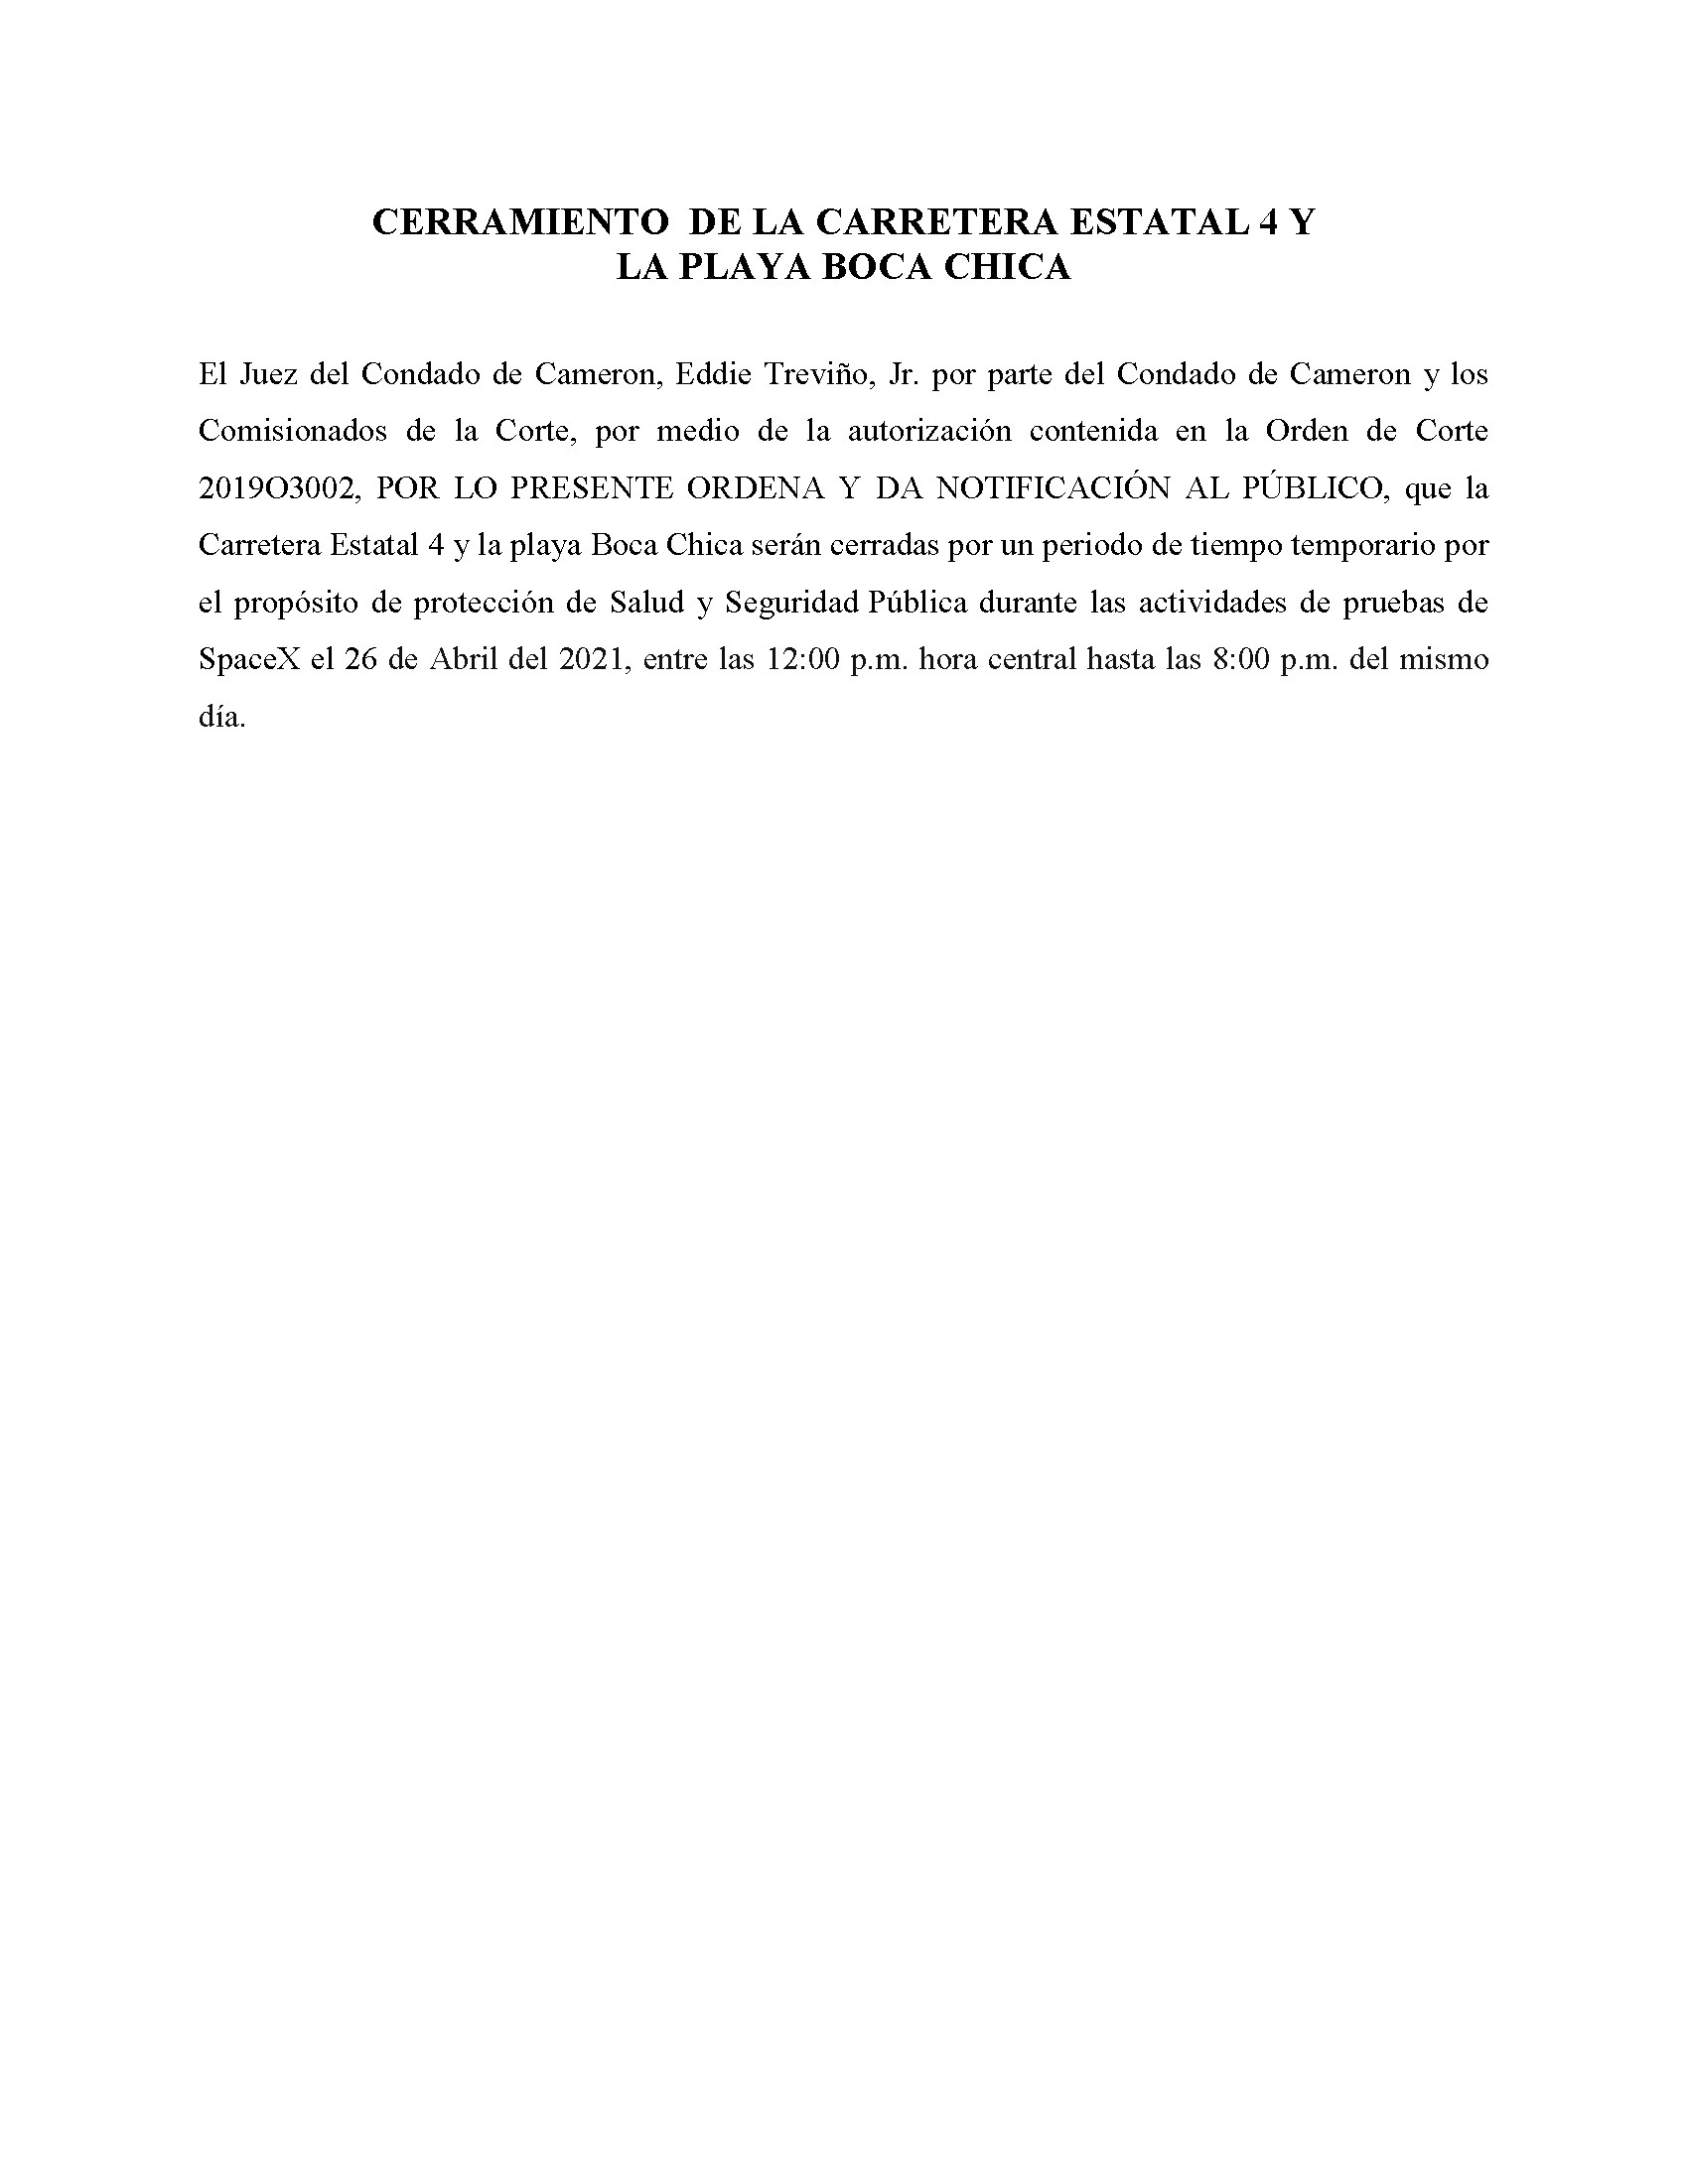 ORDER.CLOSURE OF HIGHWAY 4 Y LA PLAYA BOCA CHICA.SPANISH.04.26.2021